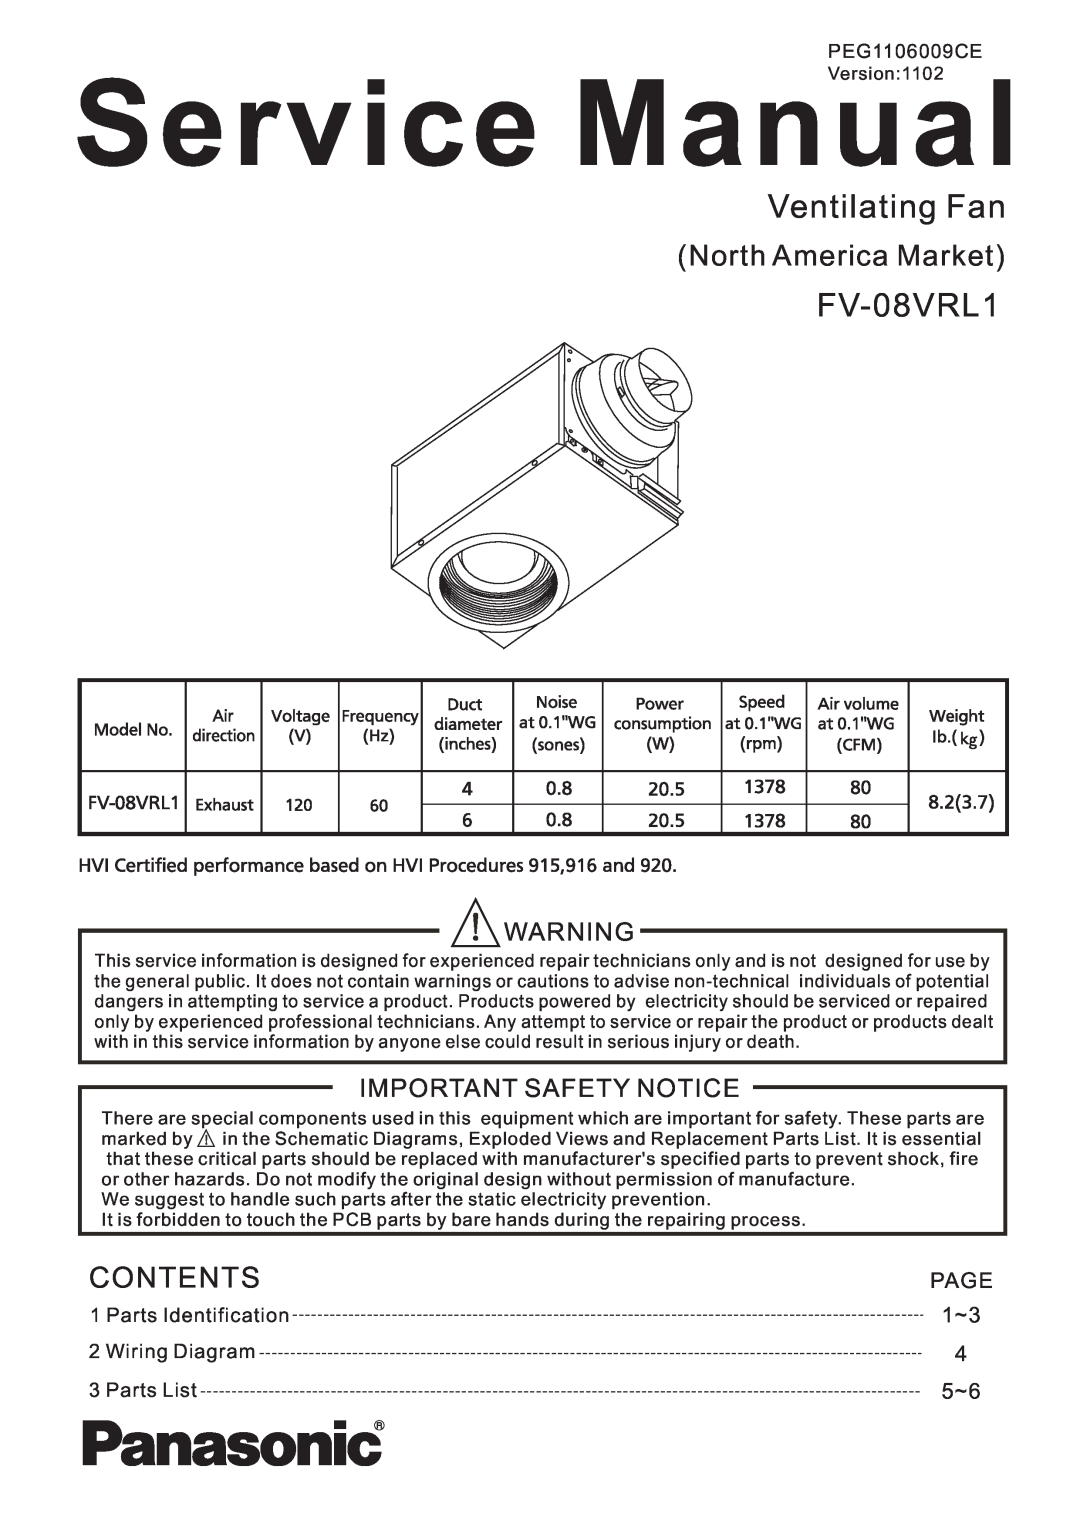 Panasonic FV-08VRL1 service manual Ventilating Fan, North America Market, Contents, Important Safety Notice, PEG1106009CE 